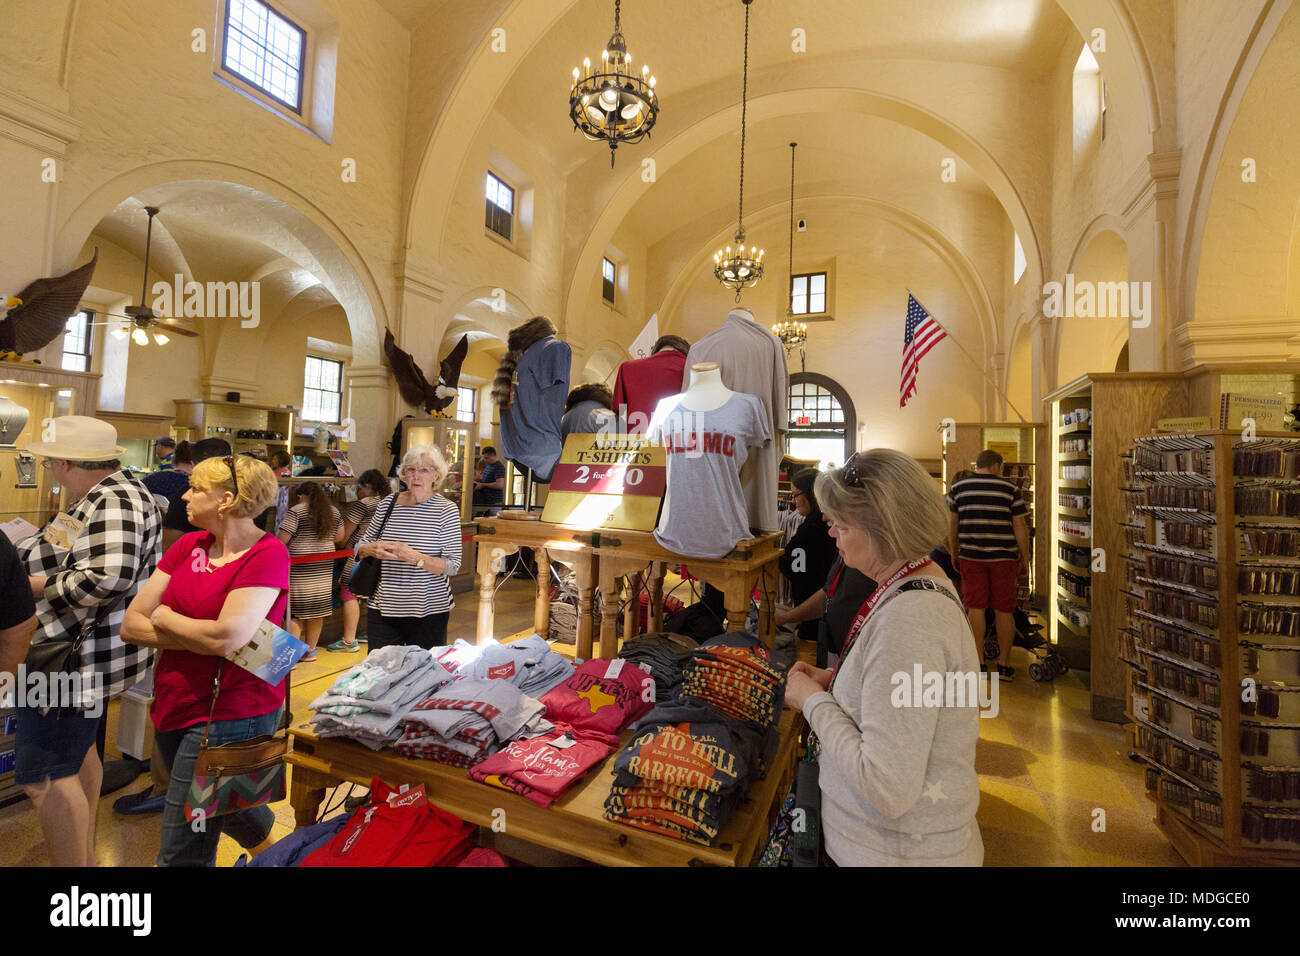 People shopping per regali e souvenir in Alamo Regali, Alamo, San Antonio, Texas, Stati Uniti d'America Foto Stock